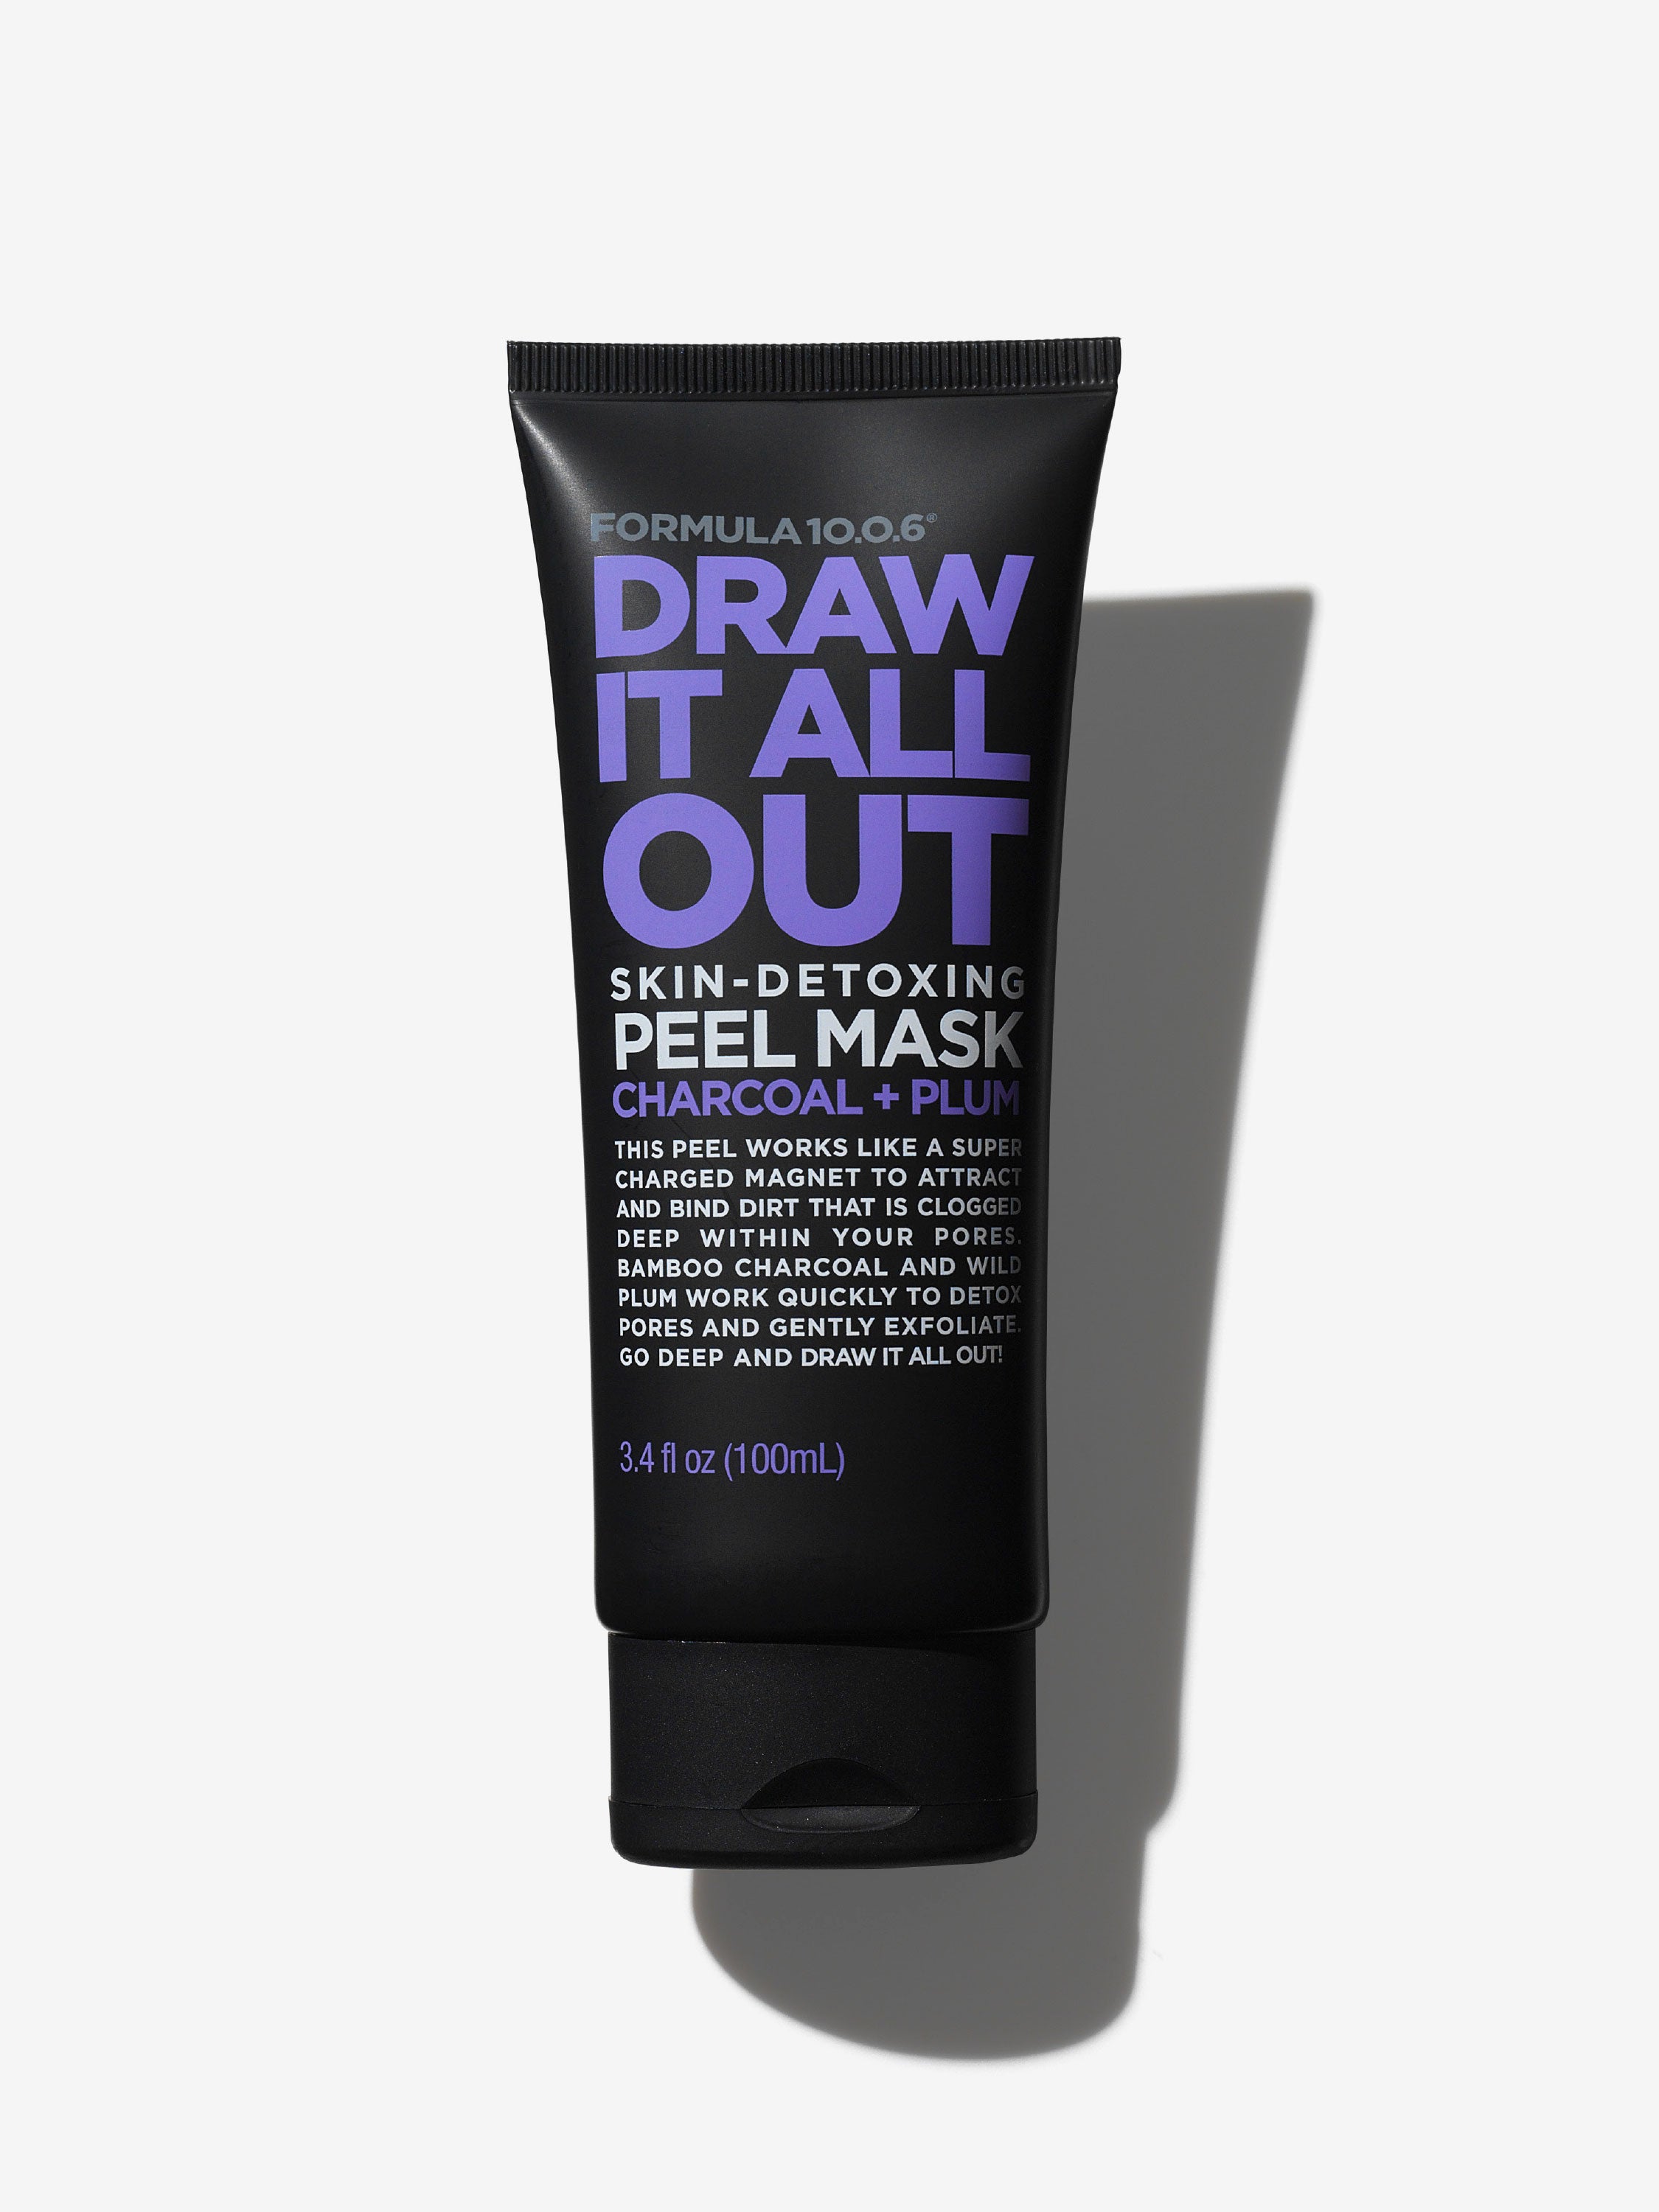 It Out - Skin Detoxing Peel Mask – Formula